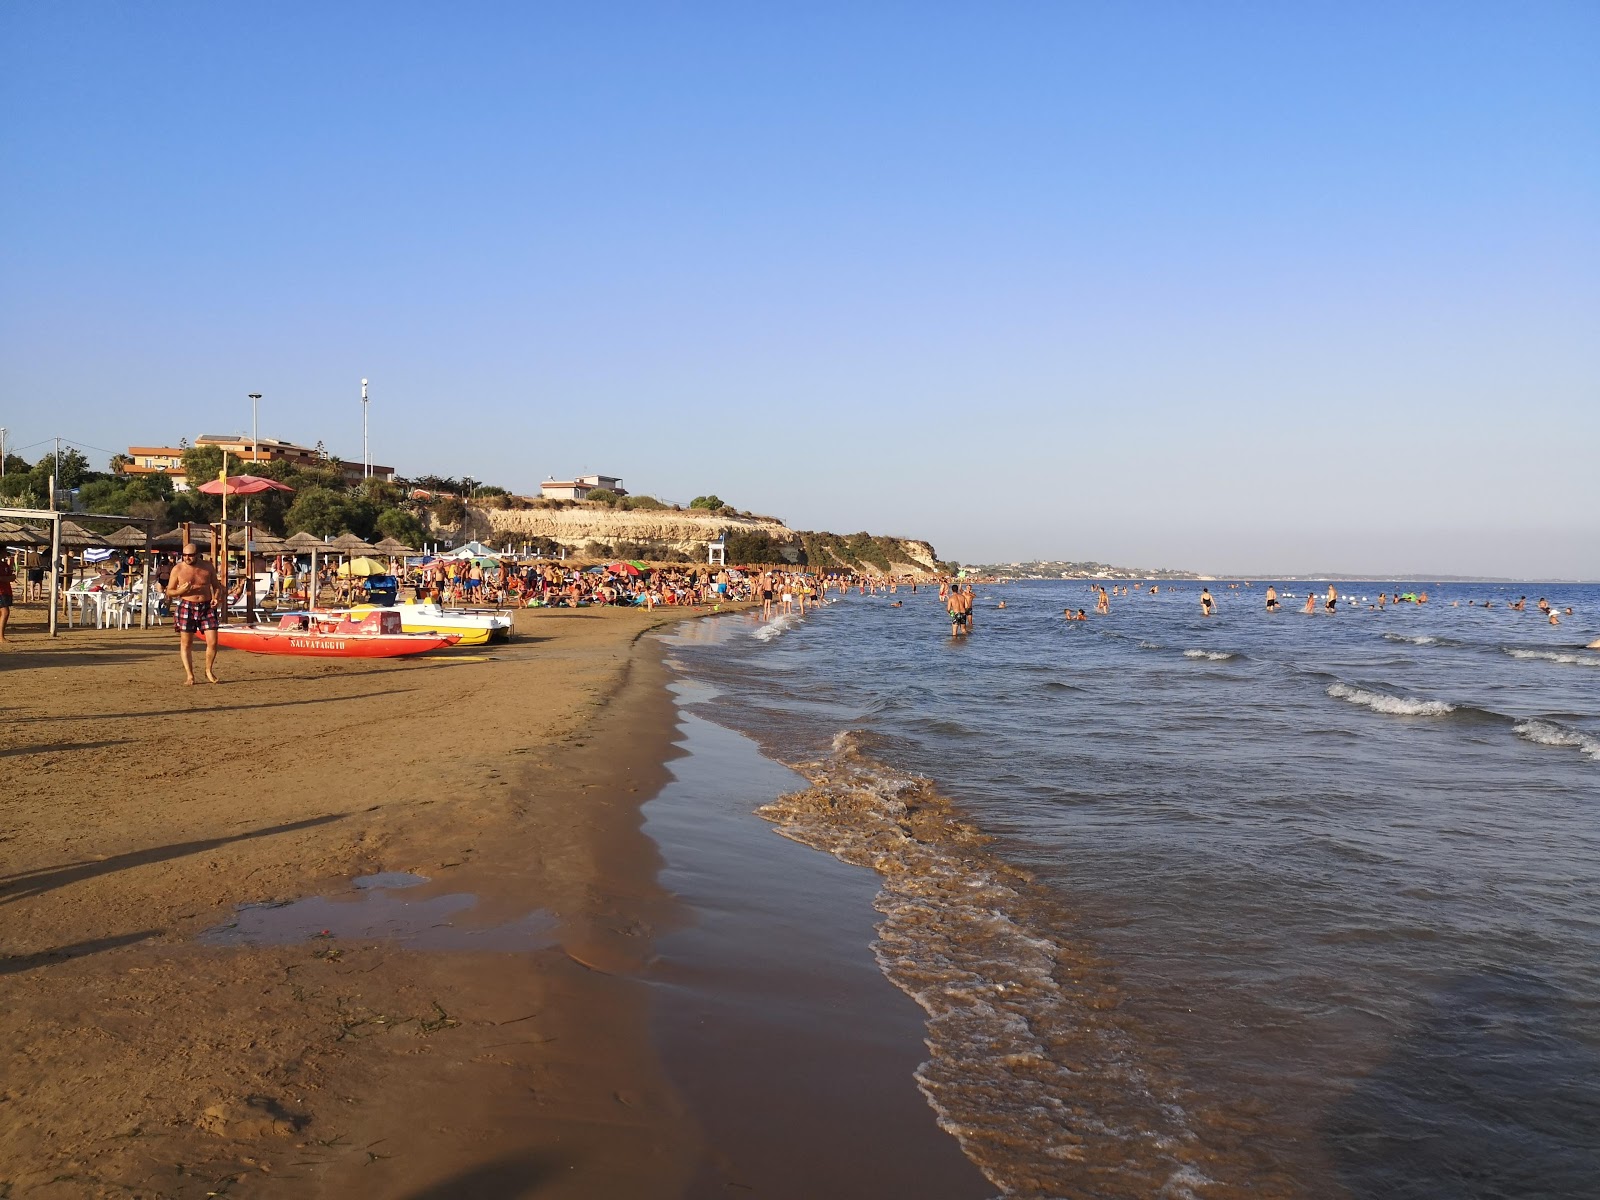 Foto de Spiaggia Pietre Nere área de resort de praia